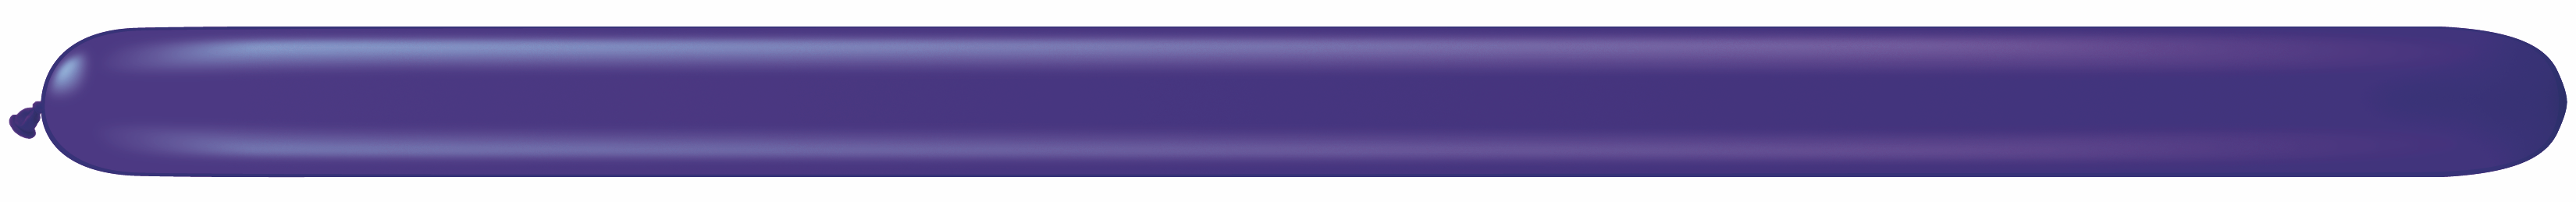 350Q Latex Balloons (100 Count) Jewel Quartz Purple